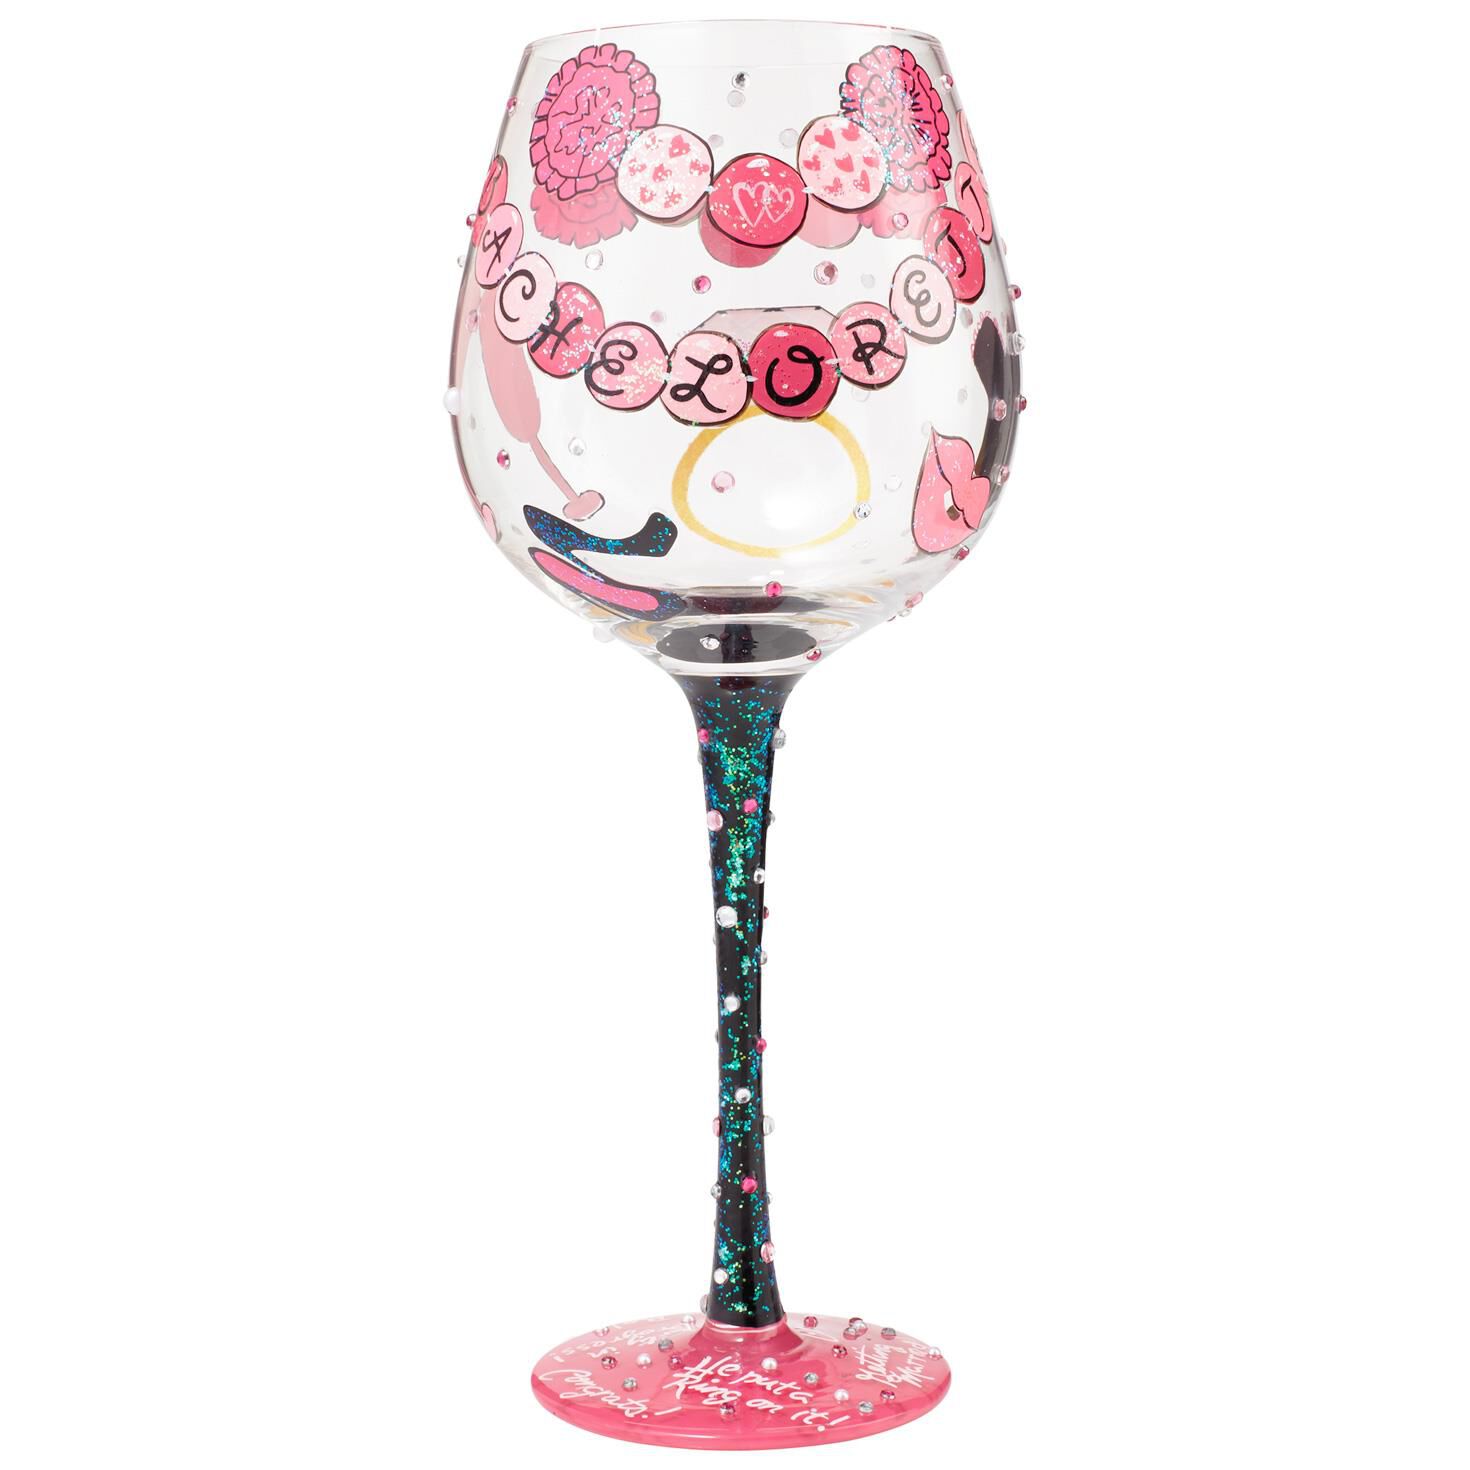 Lolita Love My Rescue Handpainted Wine Glass, 15 oz.